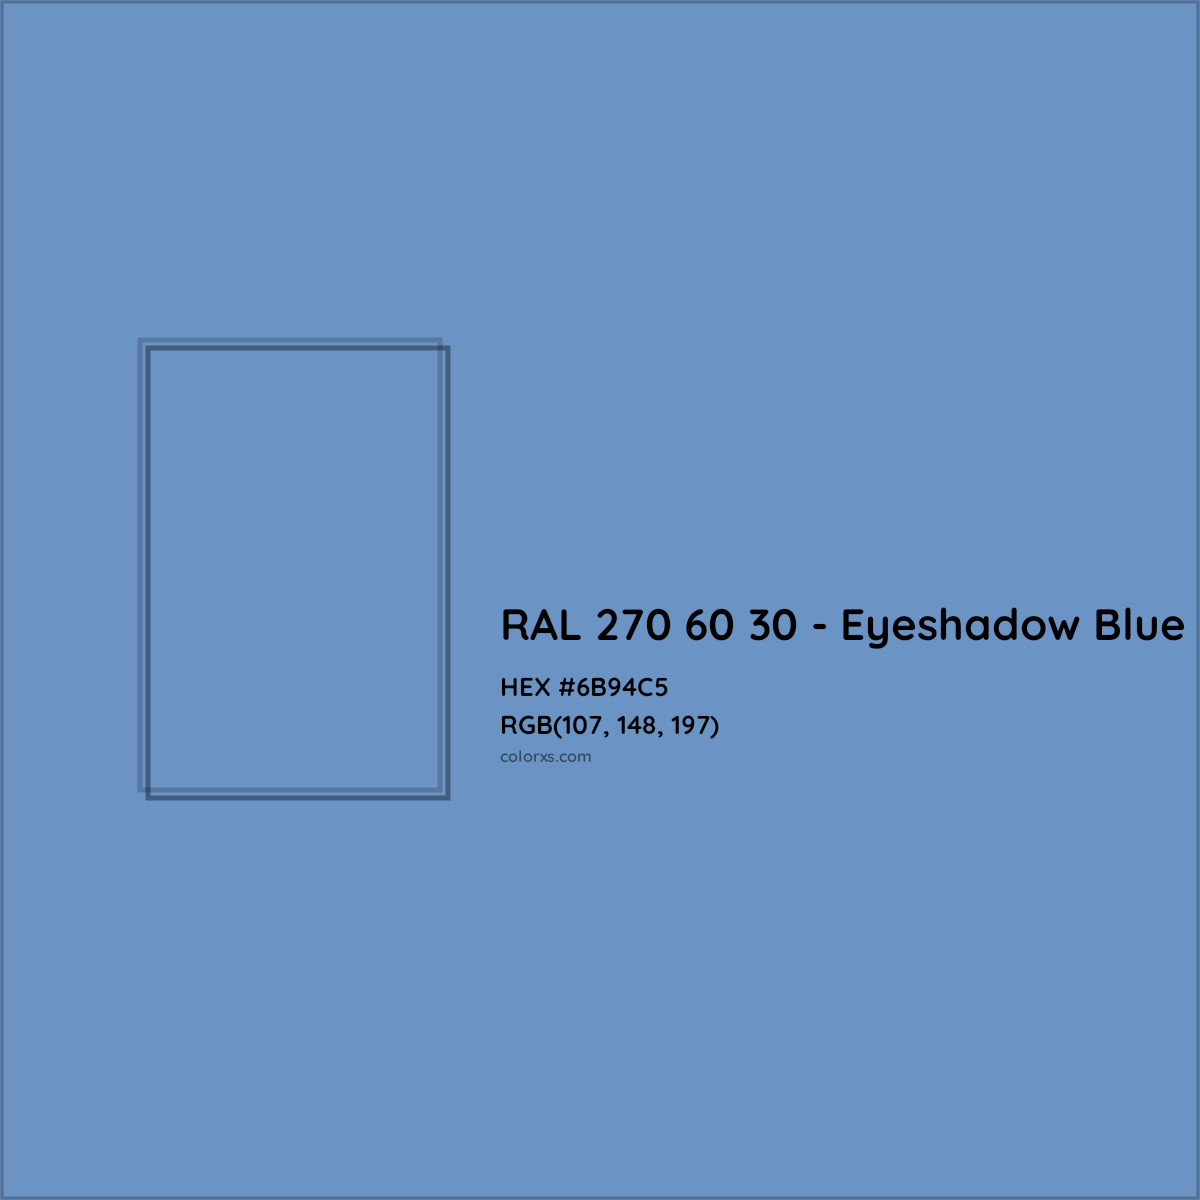 HEX #6B94C5 RAL 270 60 30 - Eyeshadow Blue CMS RAL Design - Color Code